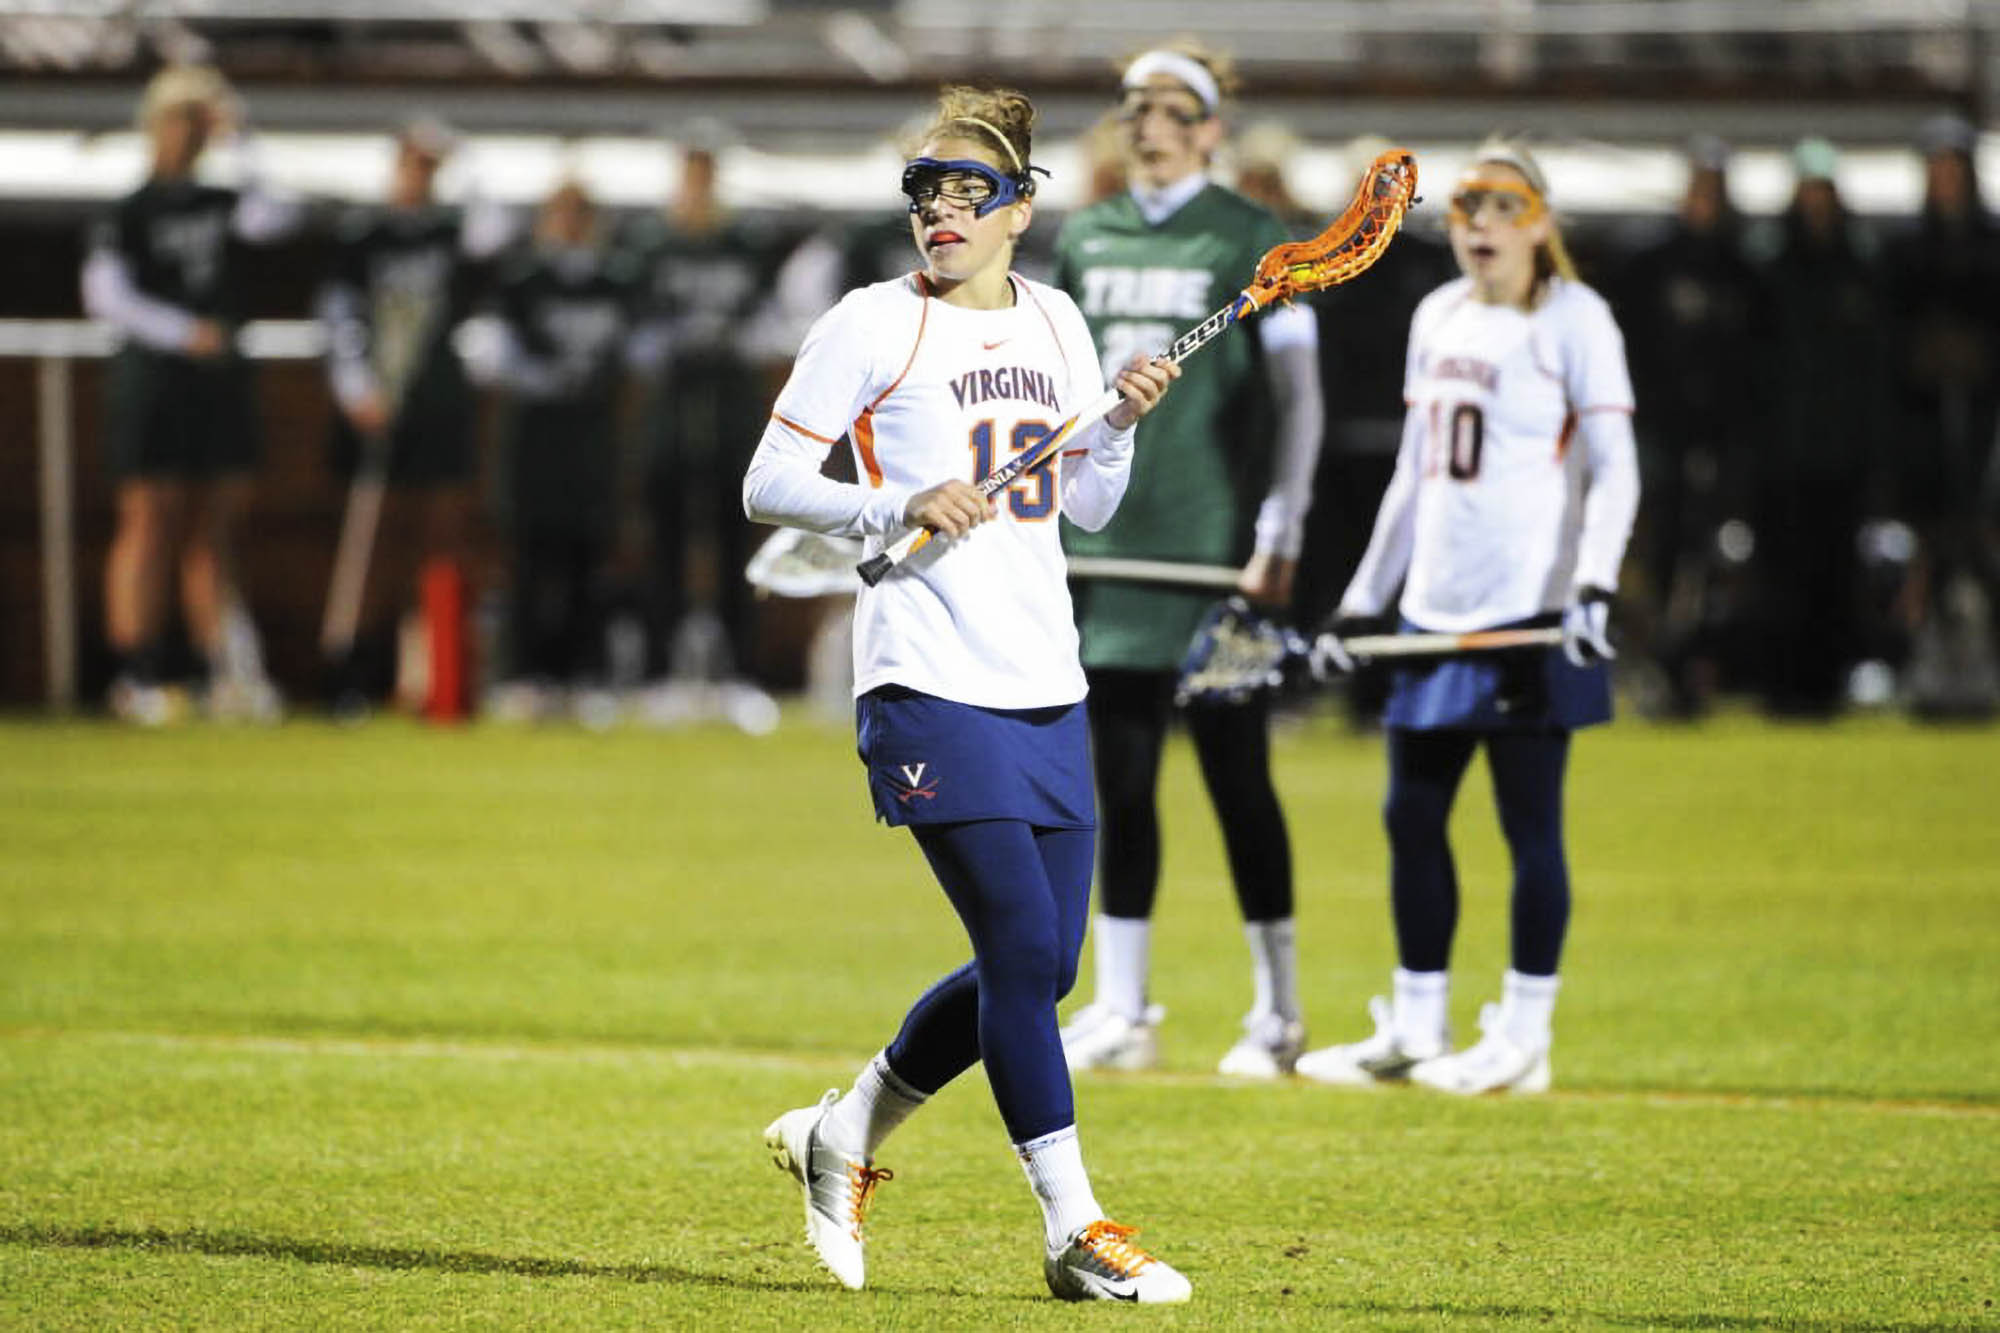 Dana Boyle playing Lacrosse in UVA uniform